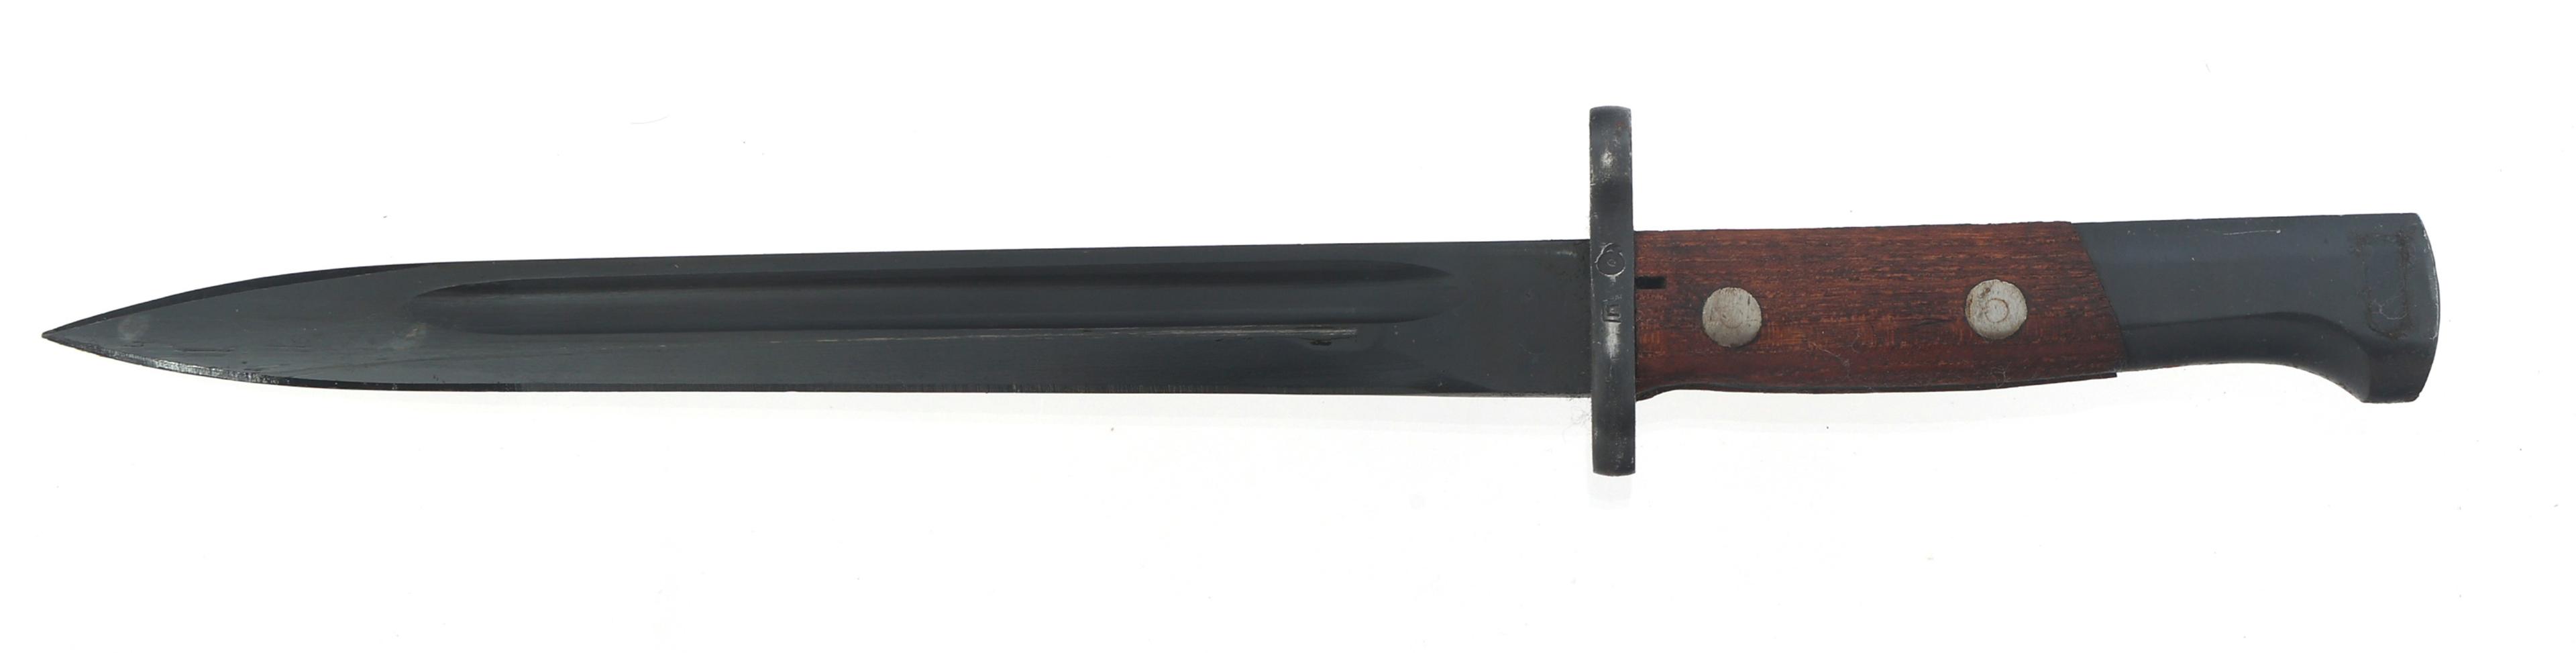 YUGOSLAVIAN MODEL 24/47 7.92x57mm CALIBER RIFLE